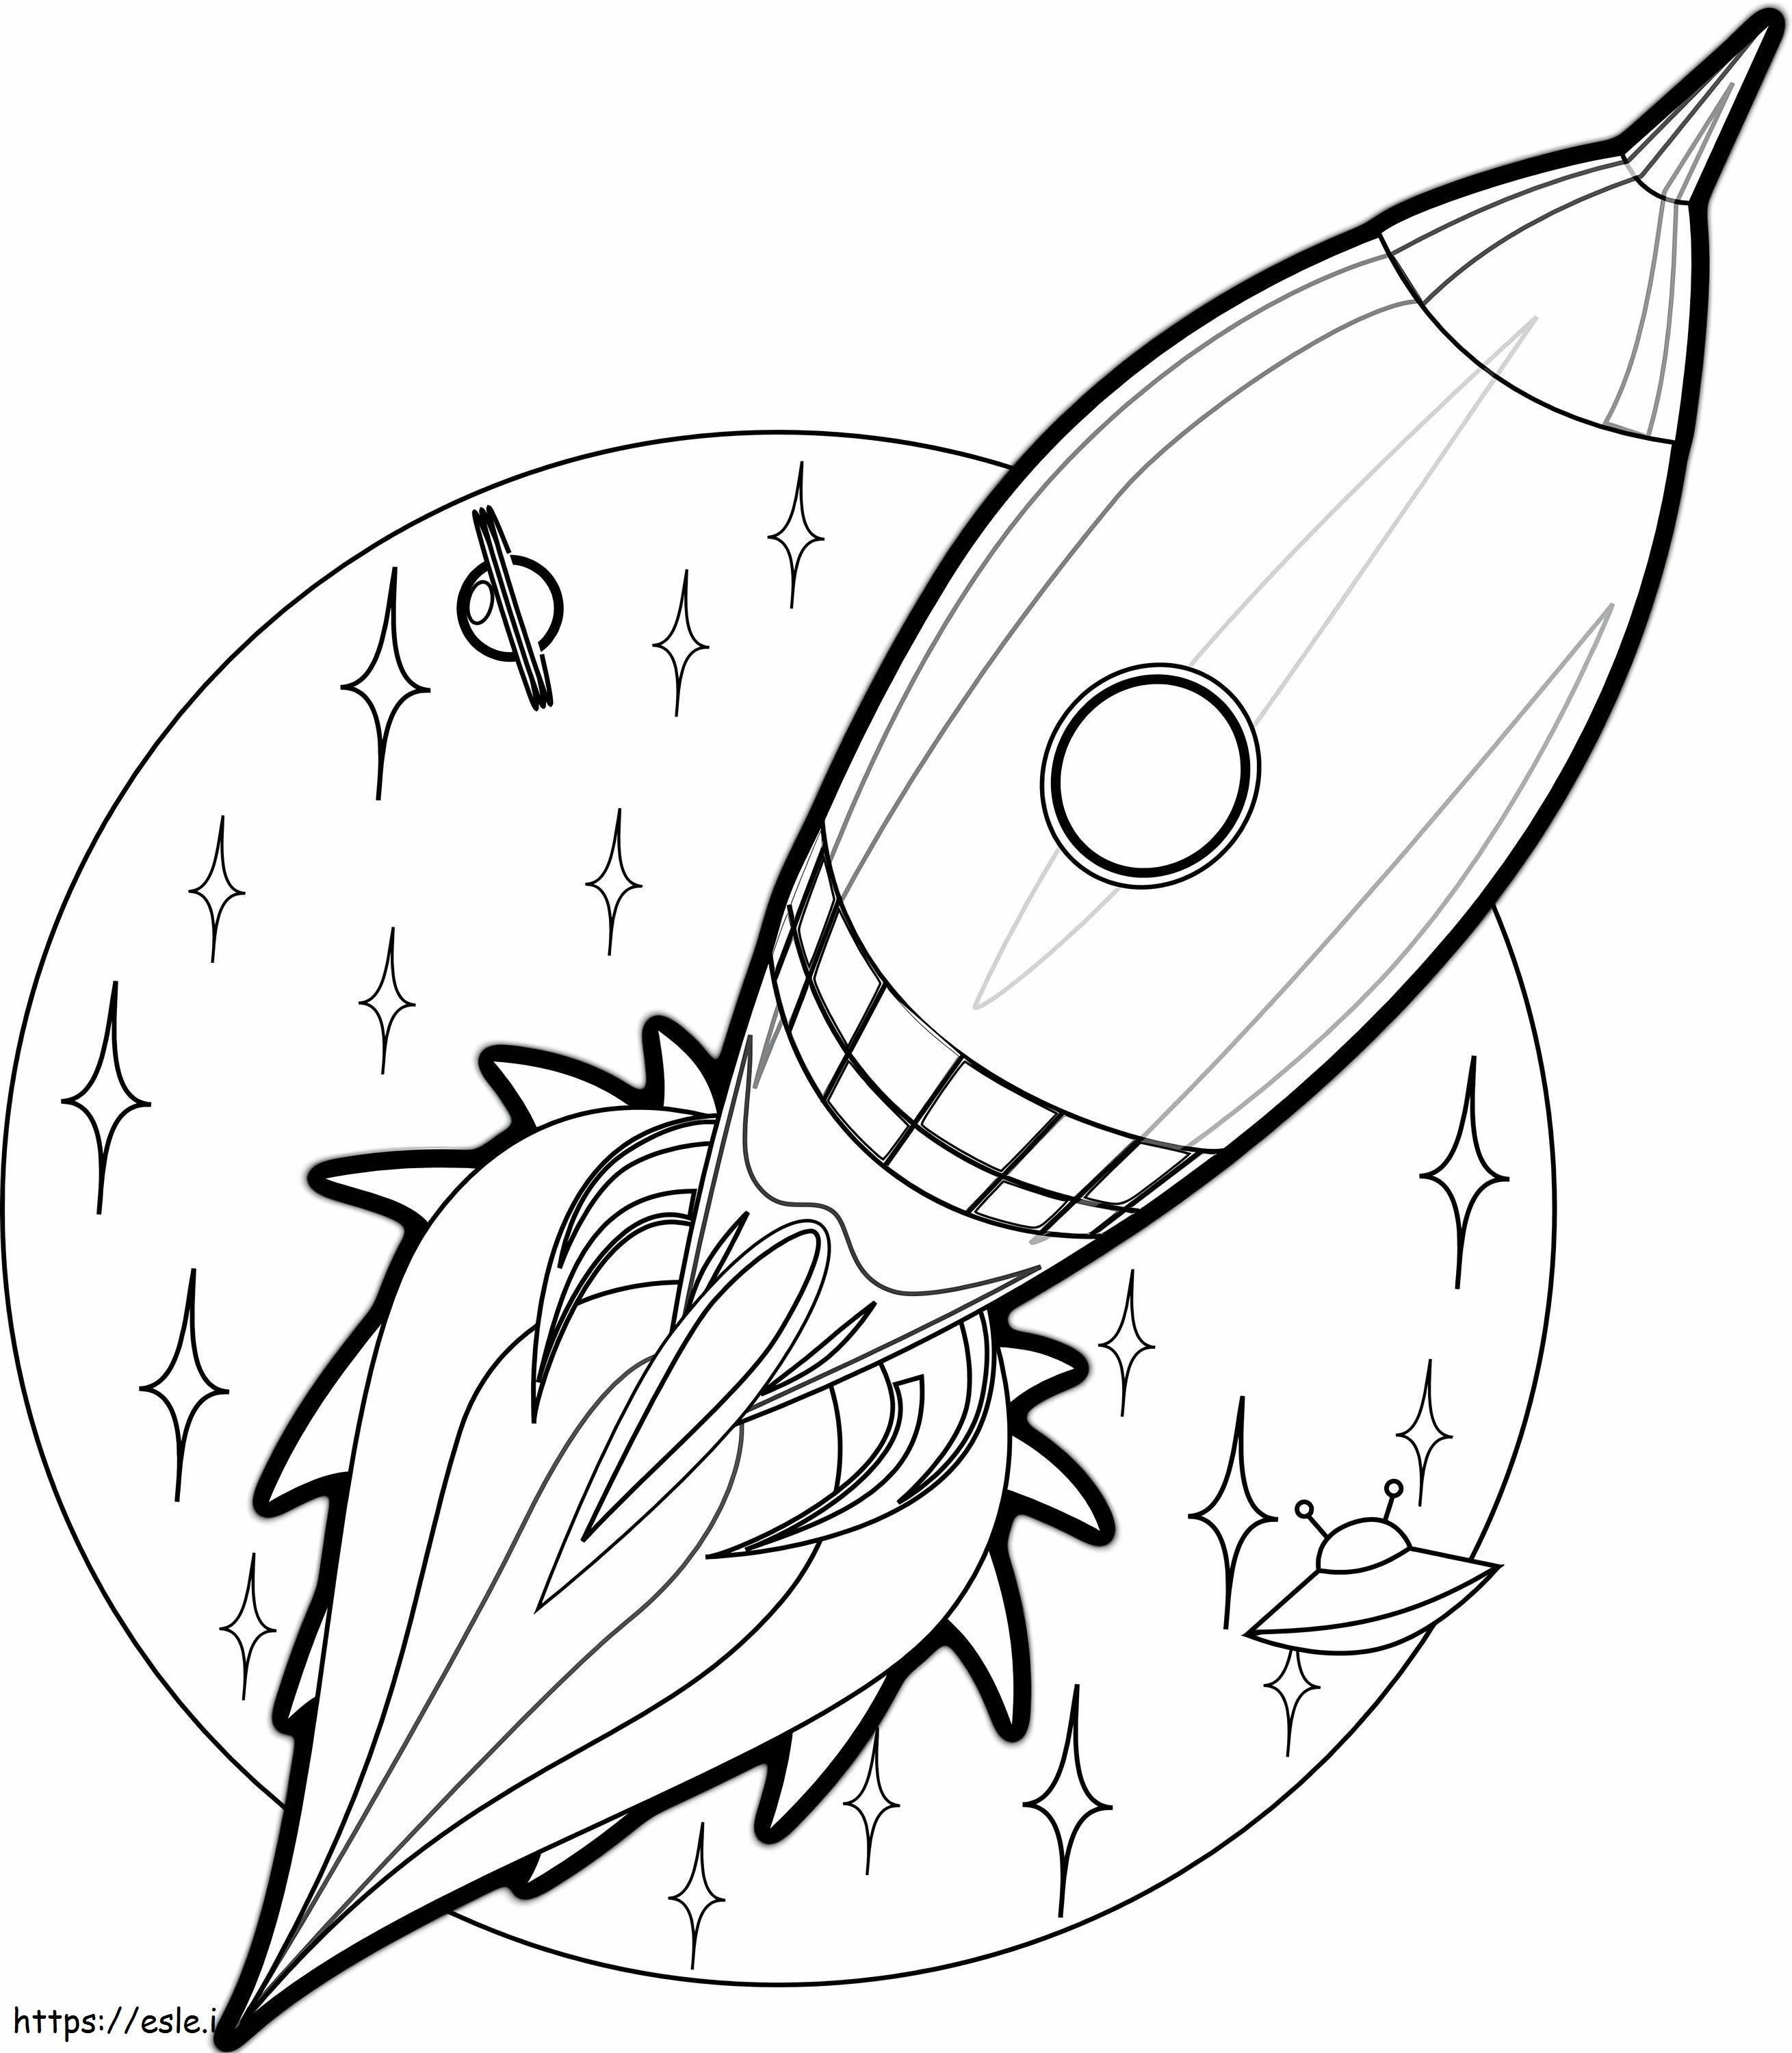 Rocket 4 coloring page